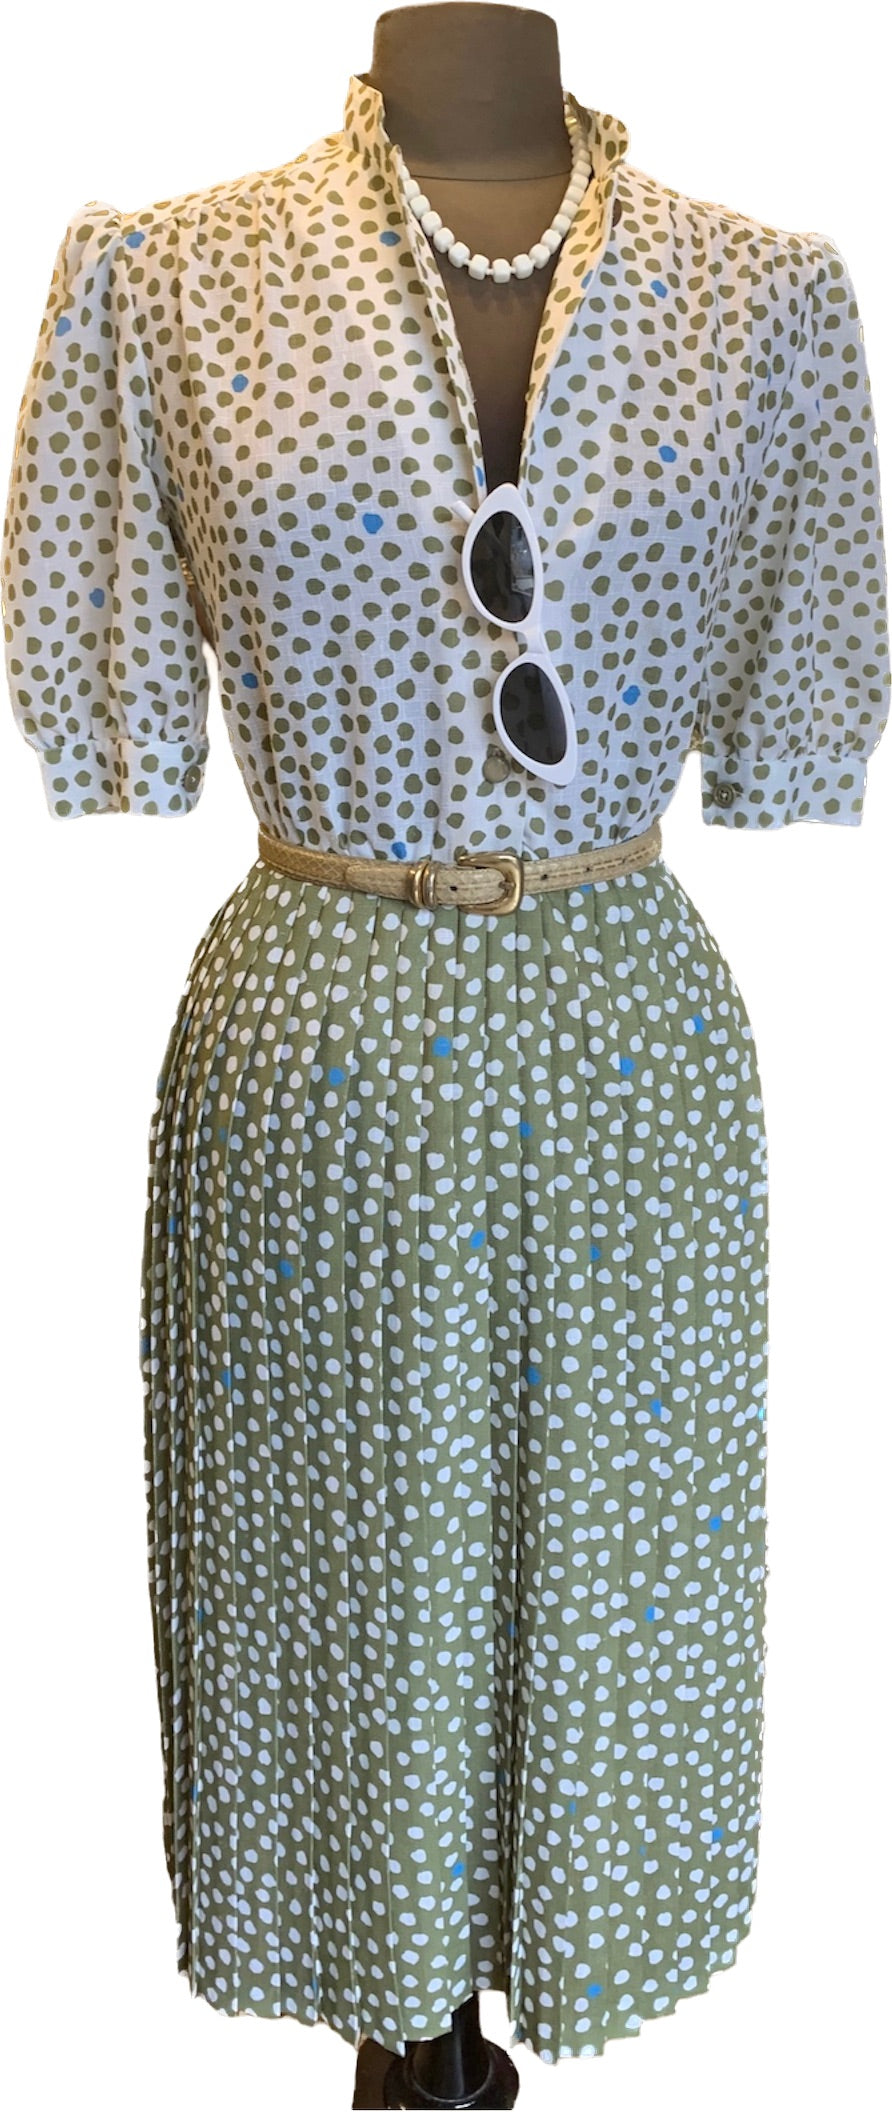 1950s Polka Dot Dress